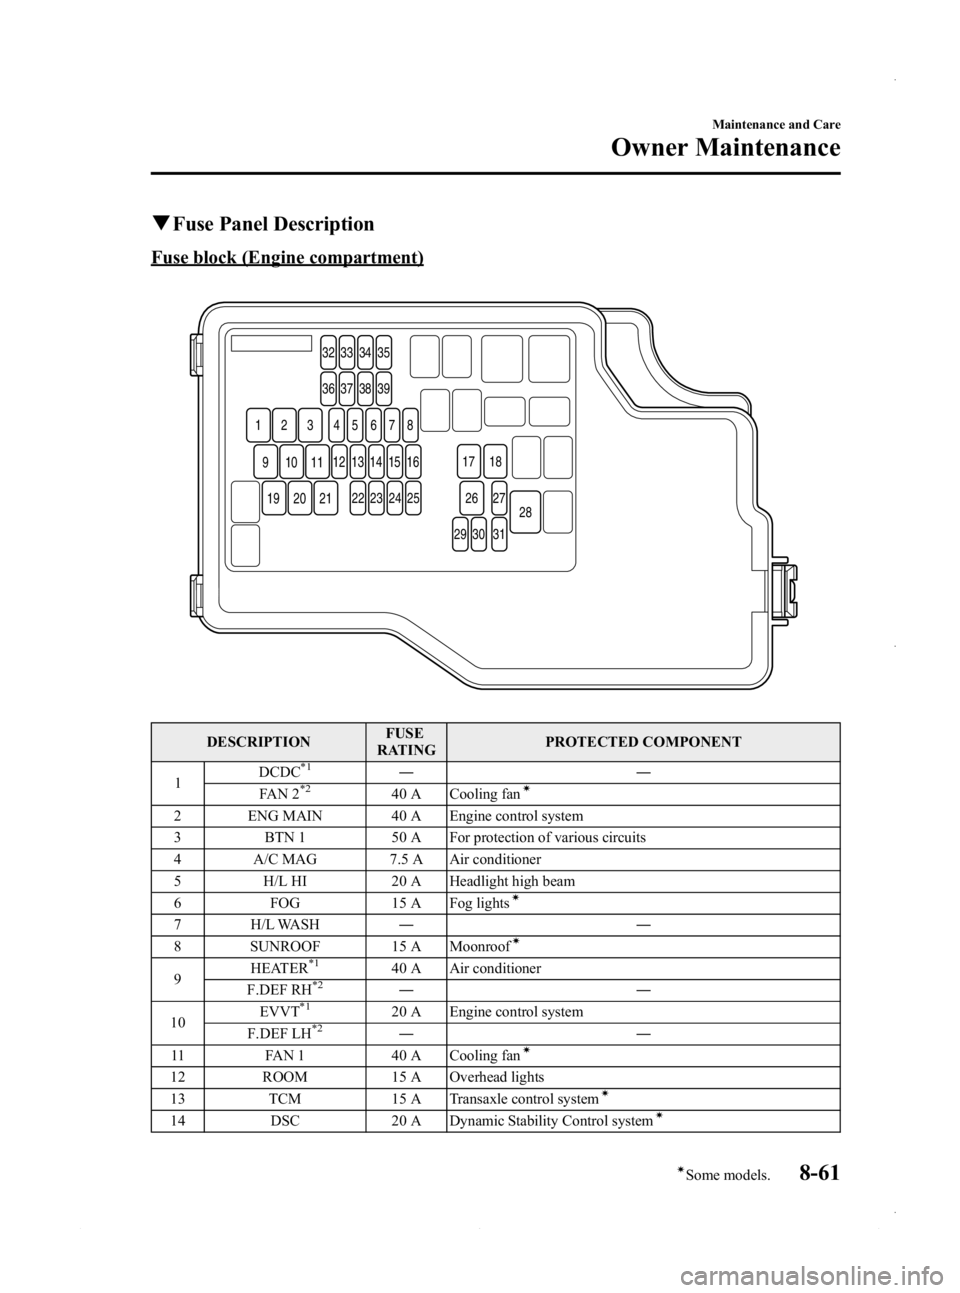 MAZDA MODEL 3 4-DOOR 2013  Owners Manual Black plate (525,1)
qFuse Panel Description
Fuse block (Engine compartment)
32 33 34 35
36 37 38 39
54
1 2 3 678
1312 14 15 16
22
11109
212019
23 24 25
29 30 3127
28
26
17 18
DESCRIPTION
FUSE
RATING P